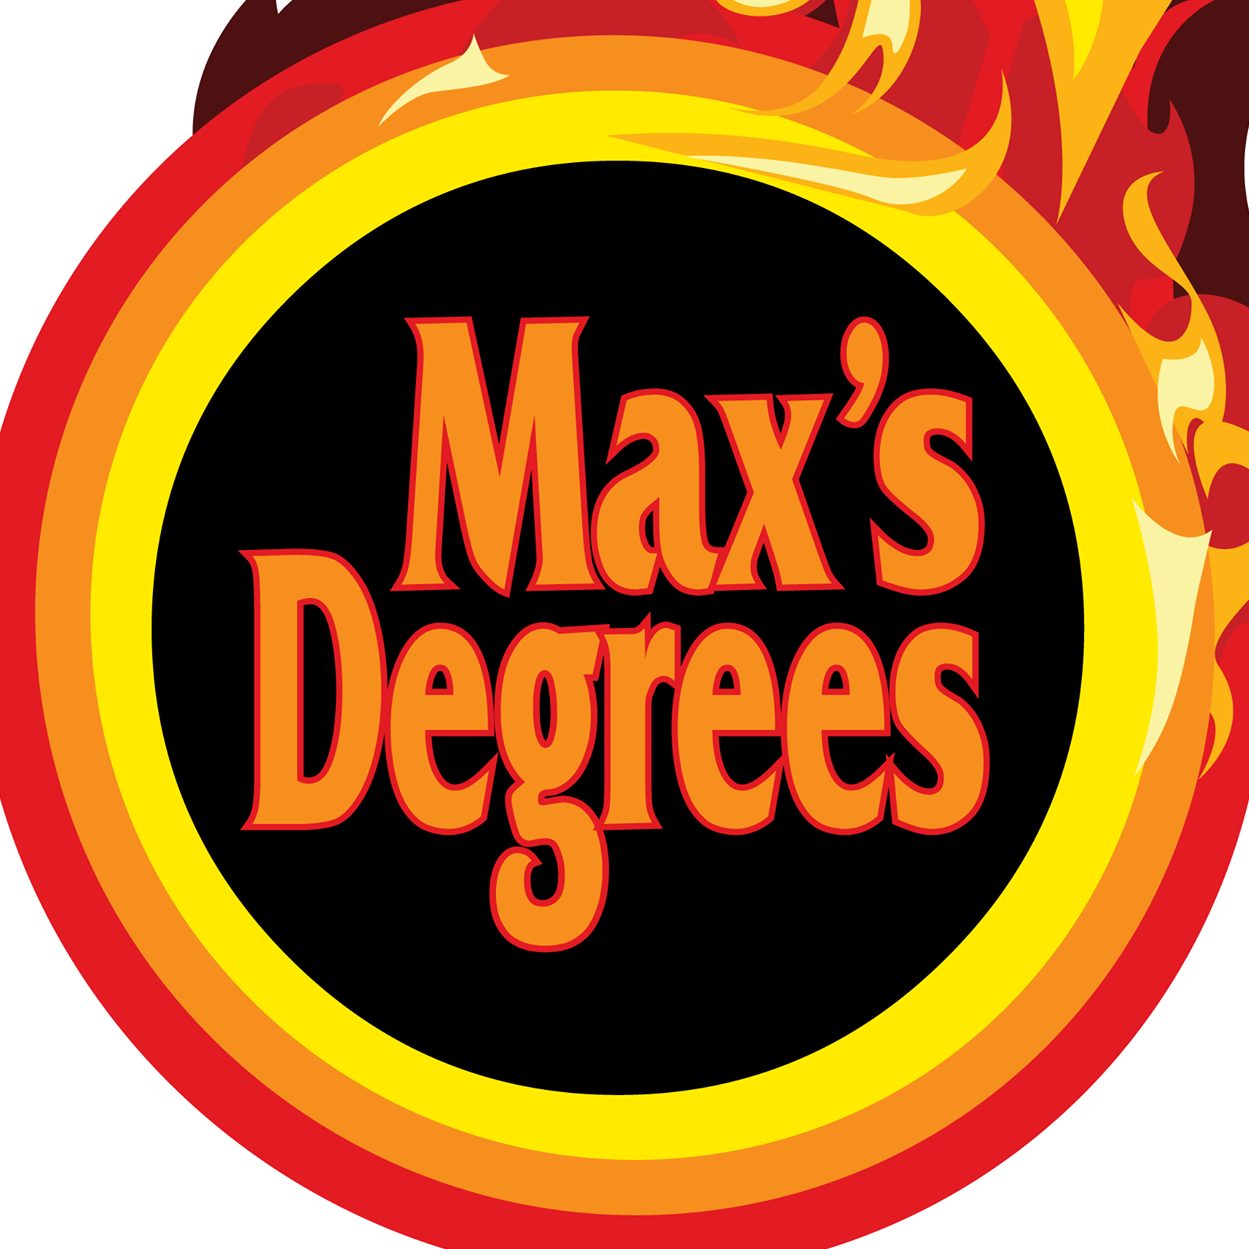 max's degrees